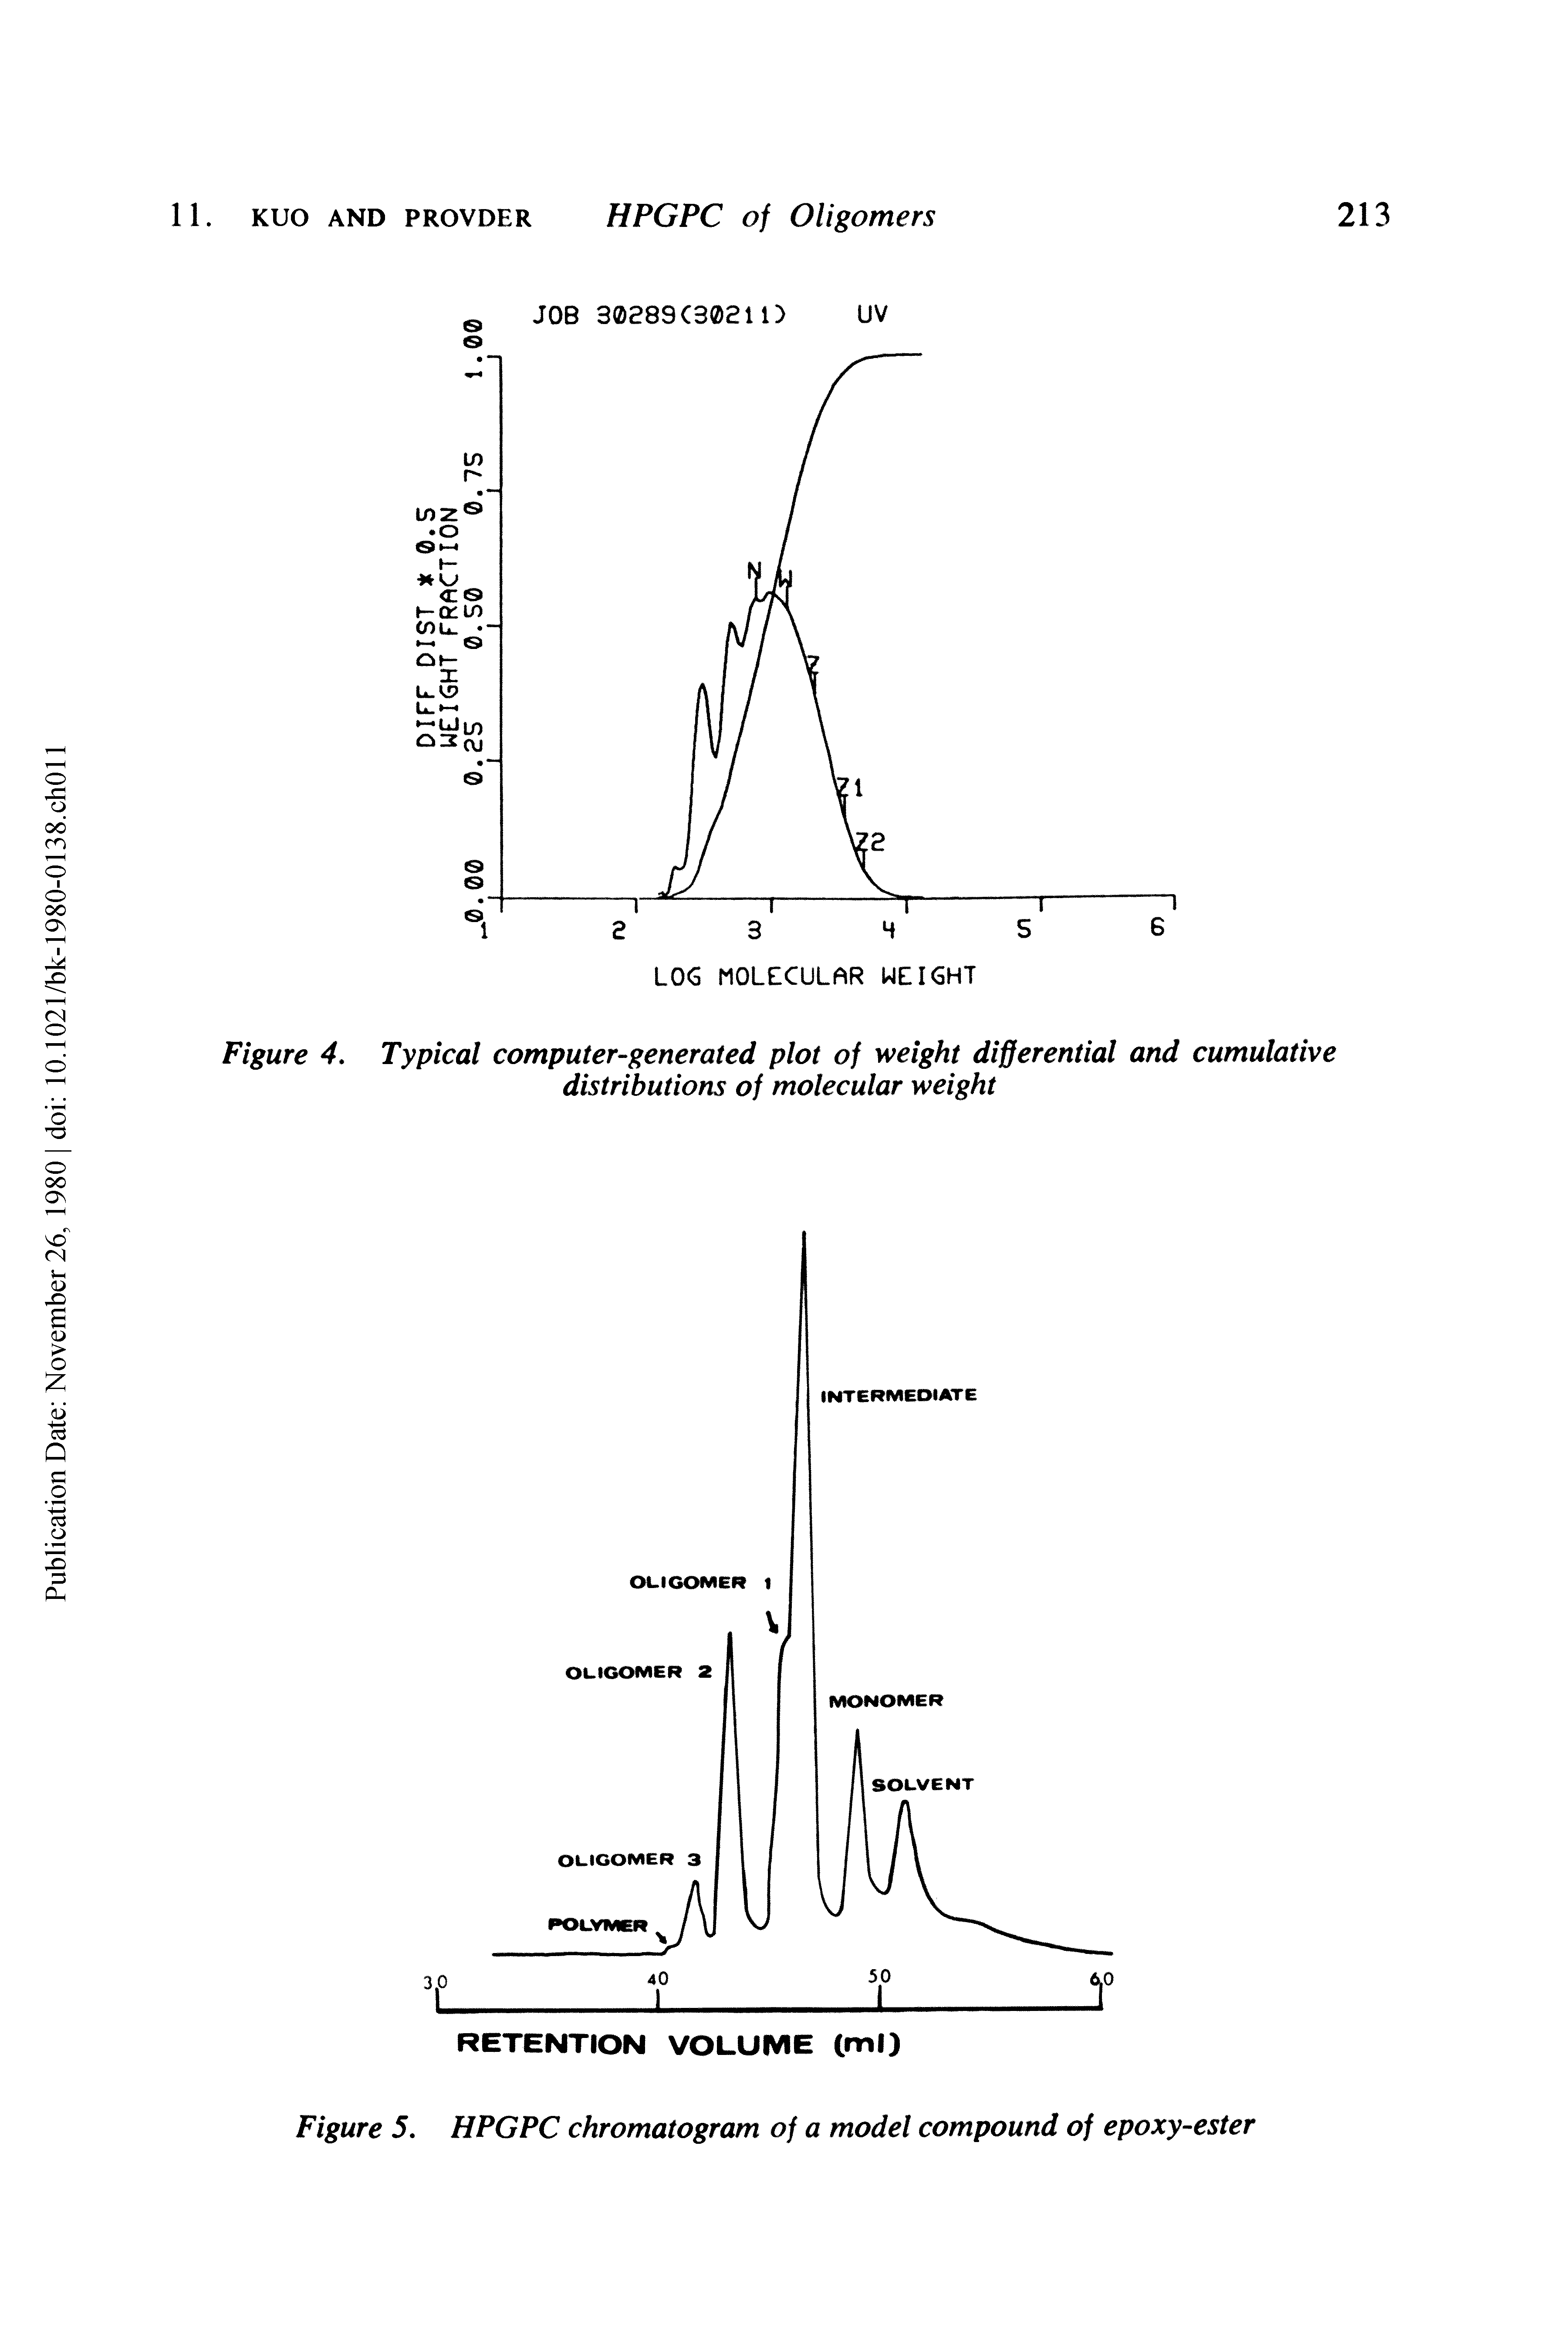 Figure 5. HPGPC chromatogram of a model compound of epoxy-ester...